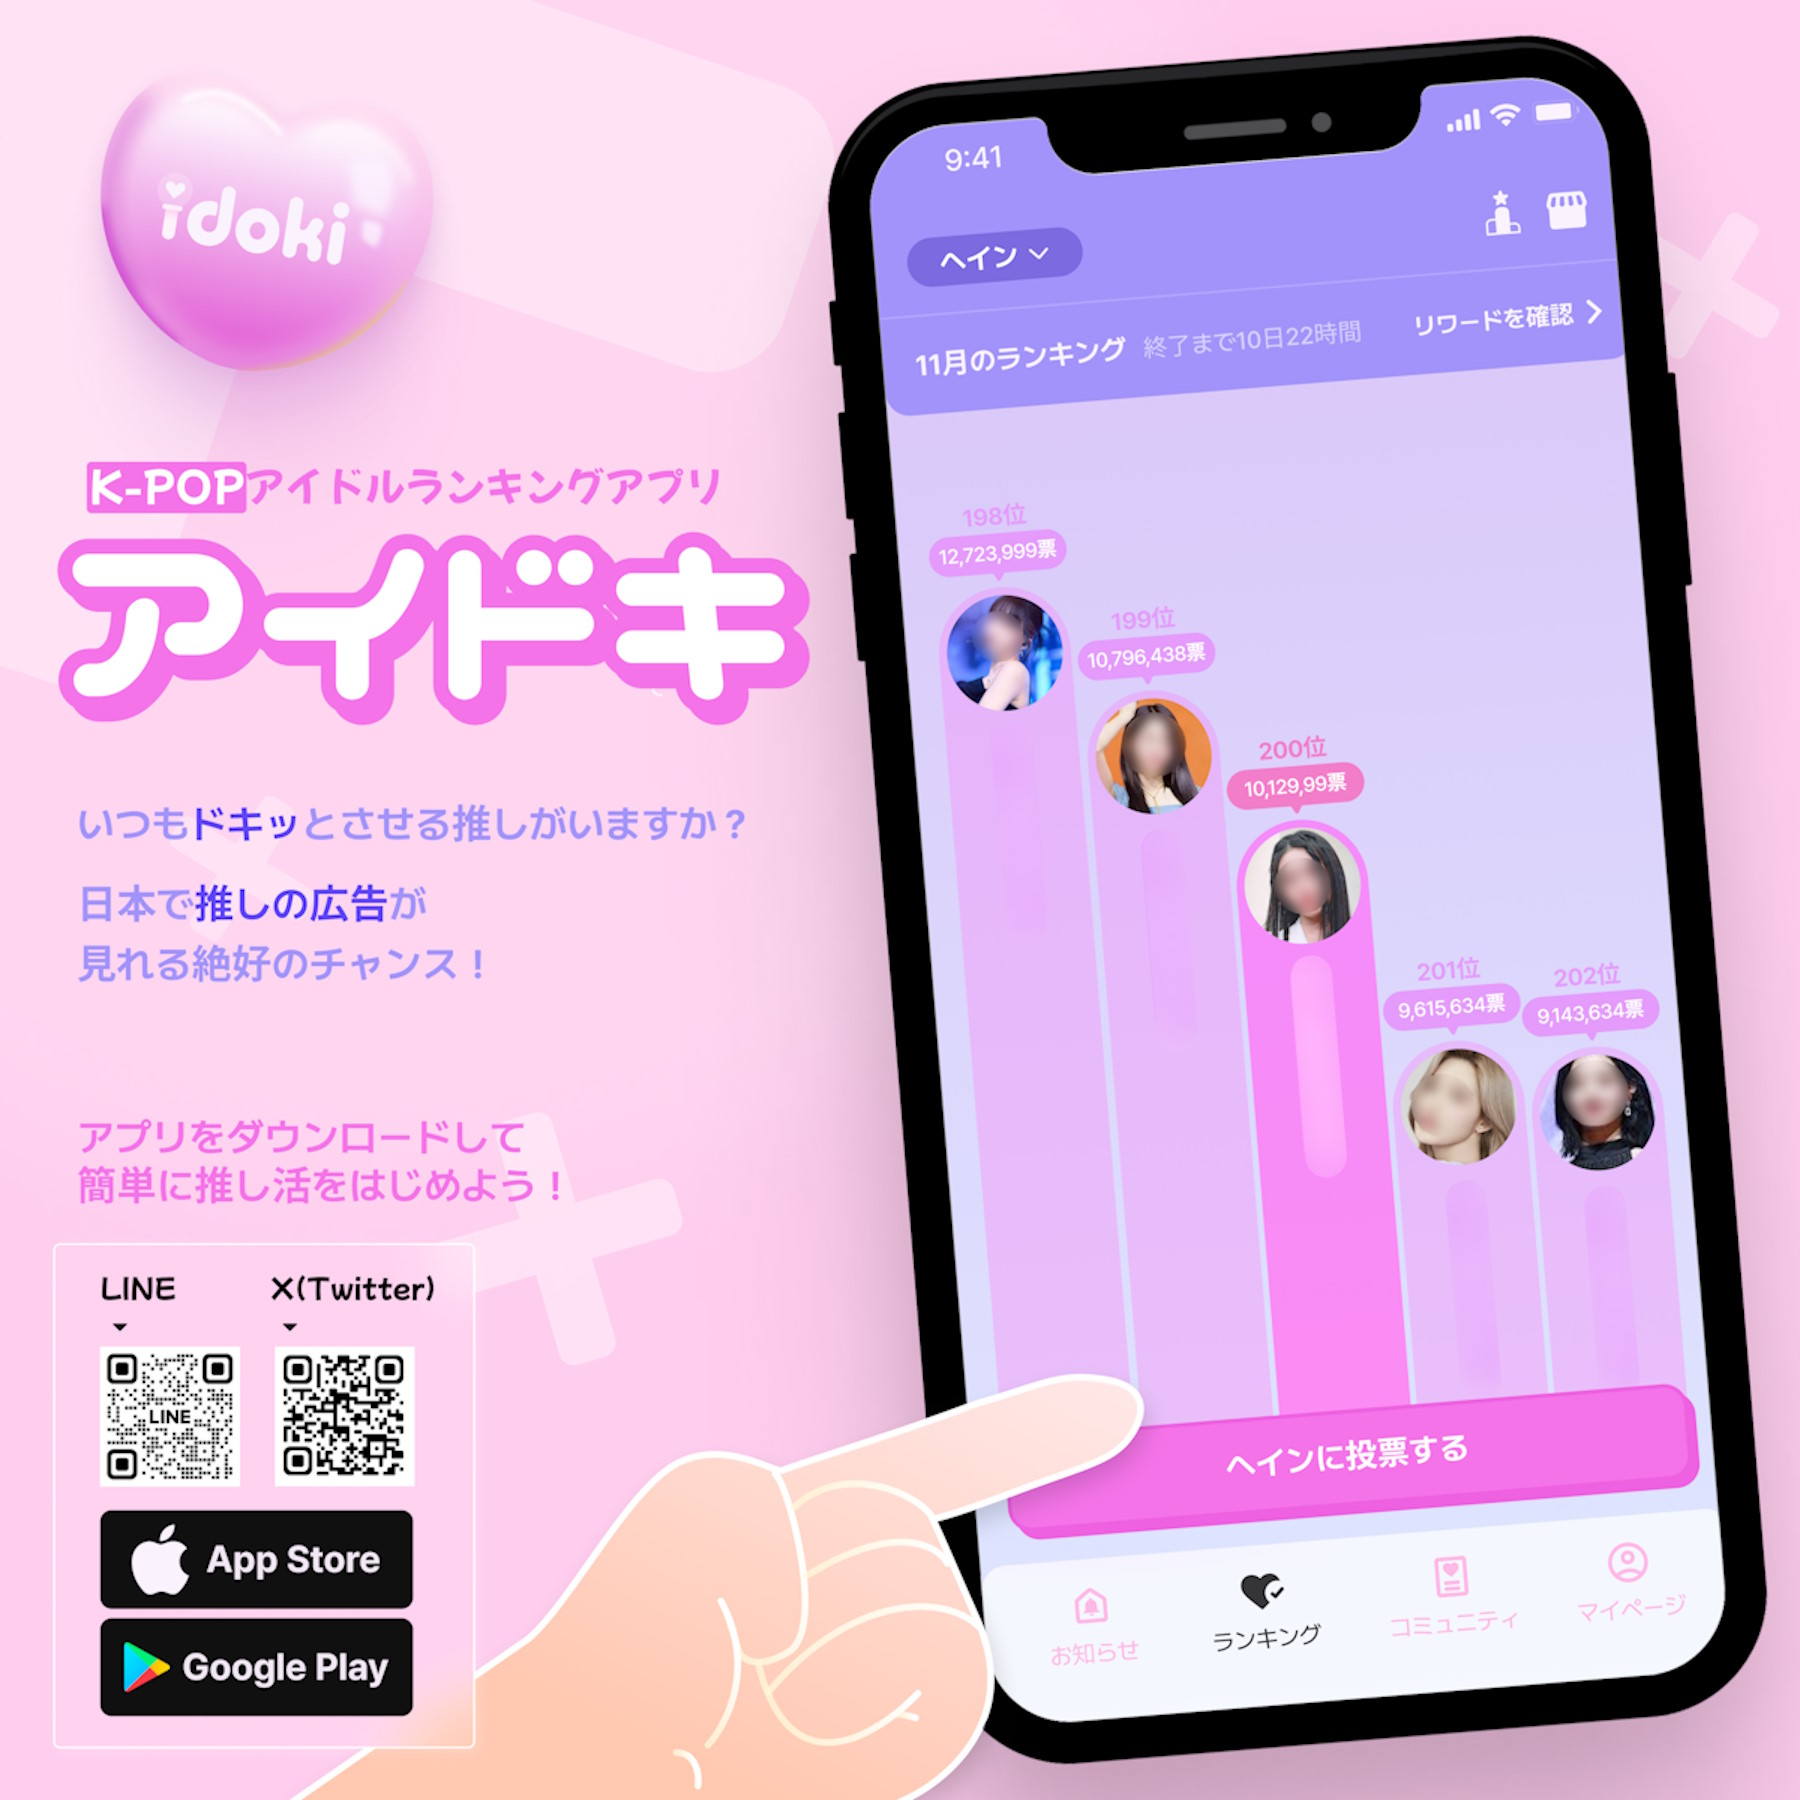 K-POP アイドル投票アプリケーション ’アイドキ(idoki)’サービス立ち上げ